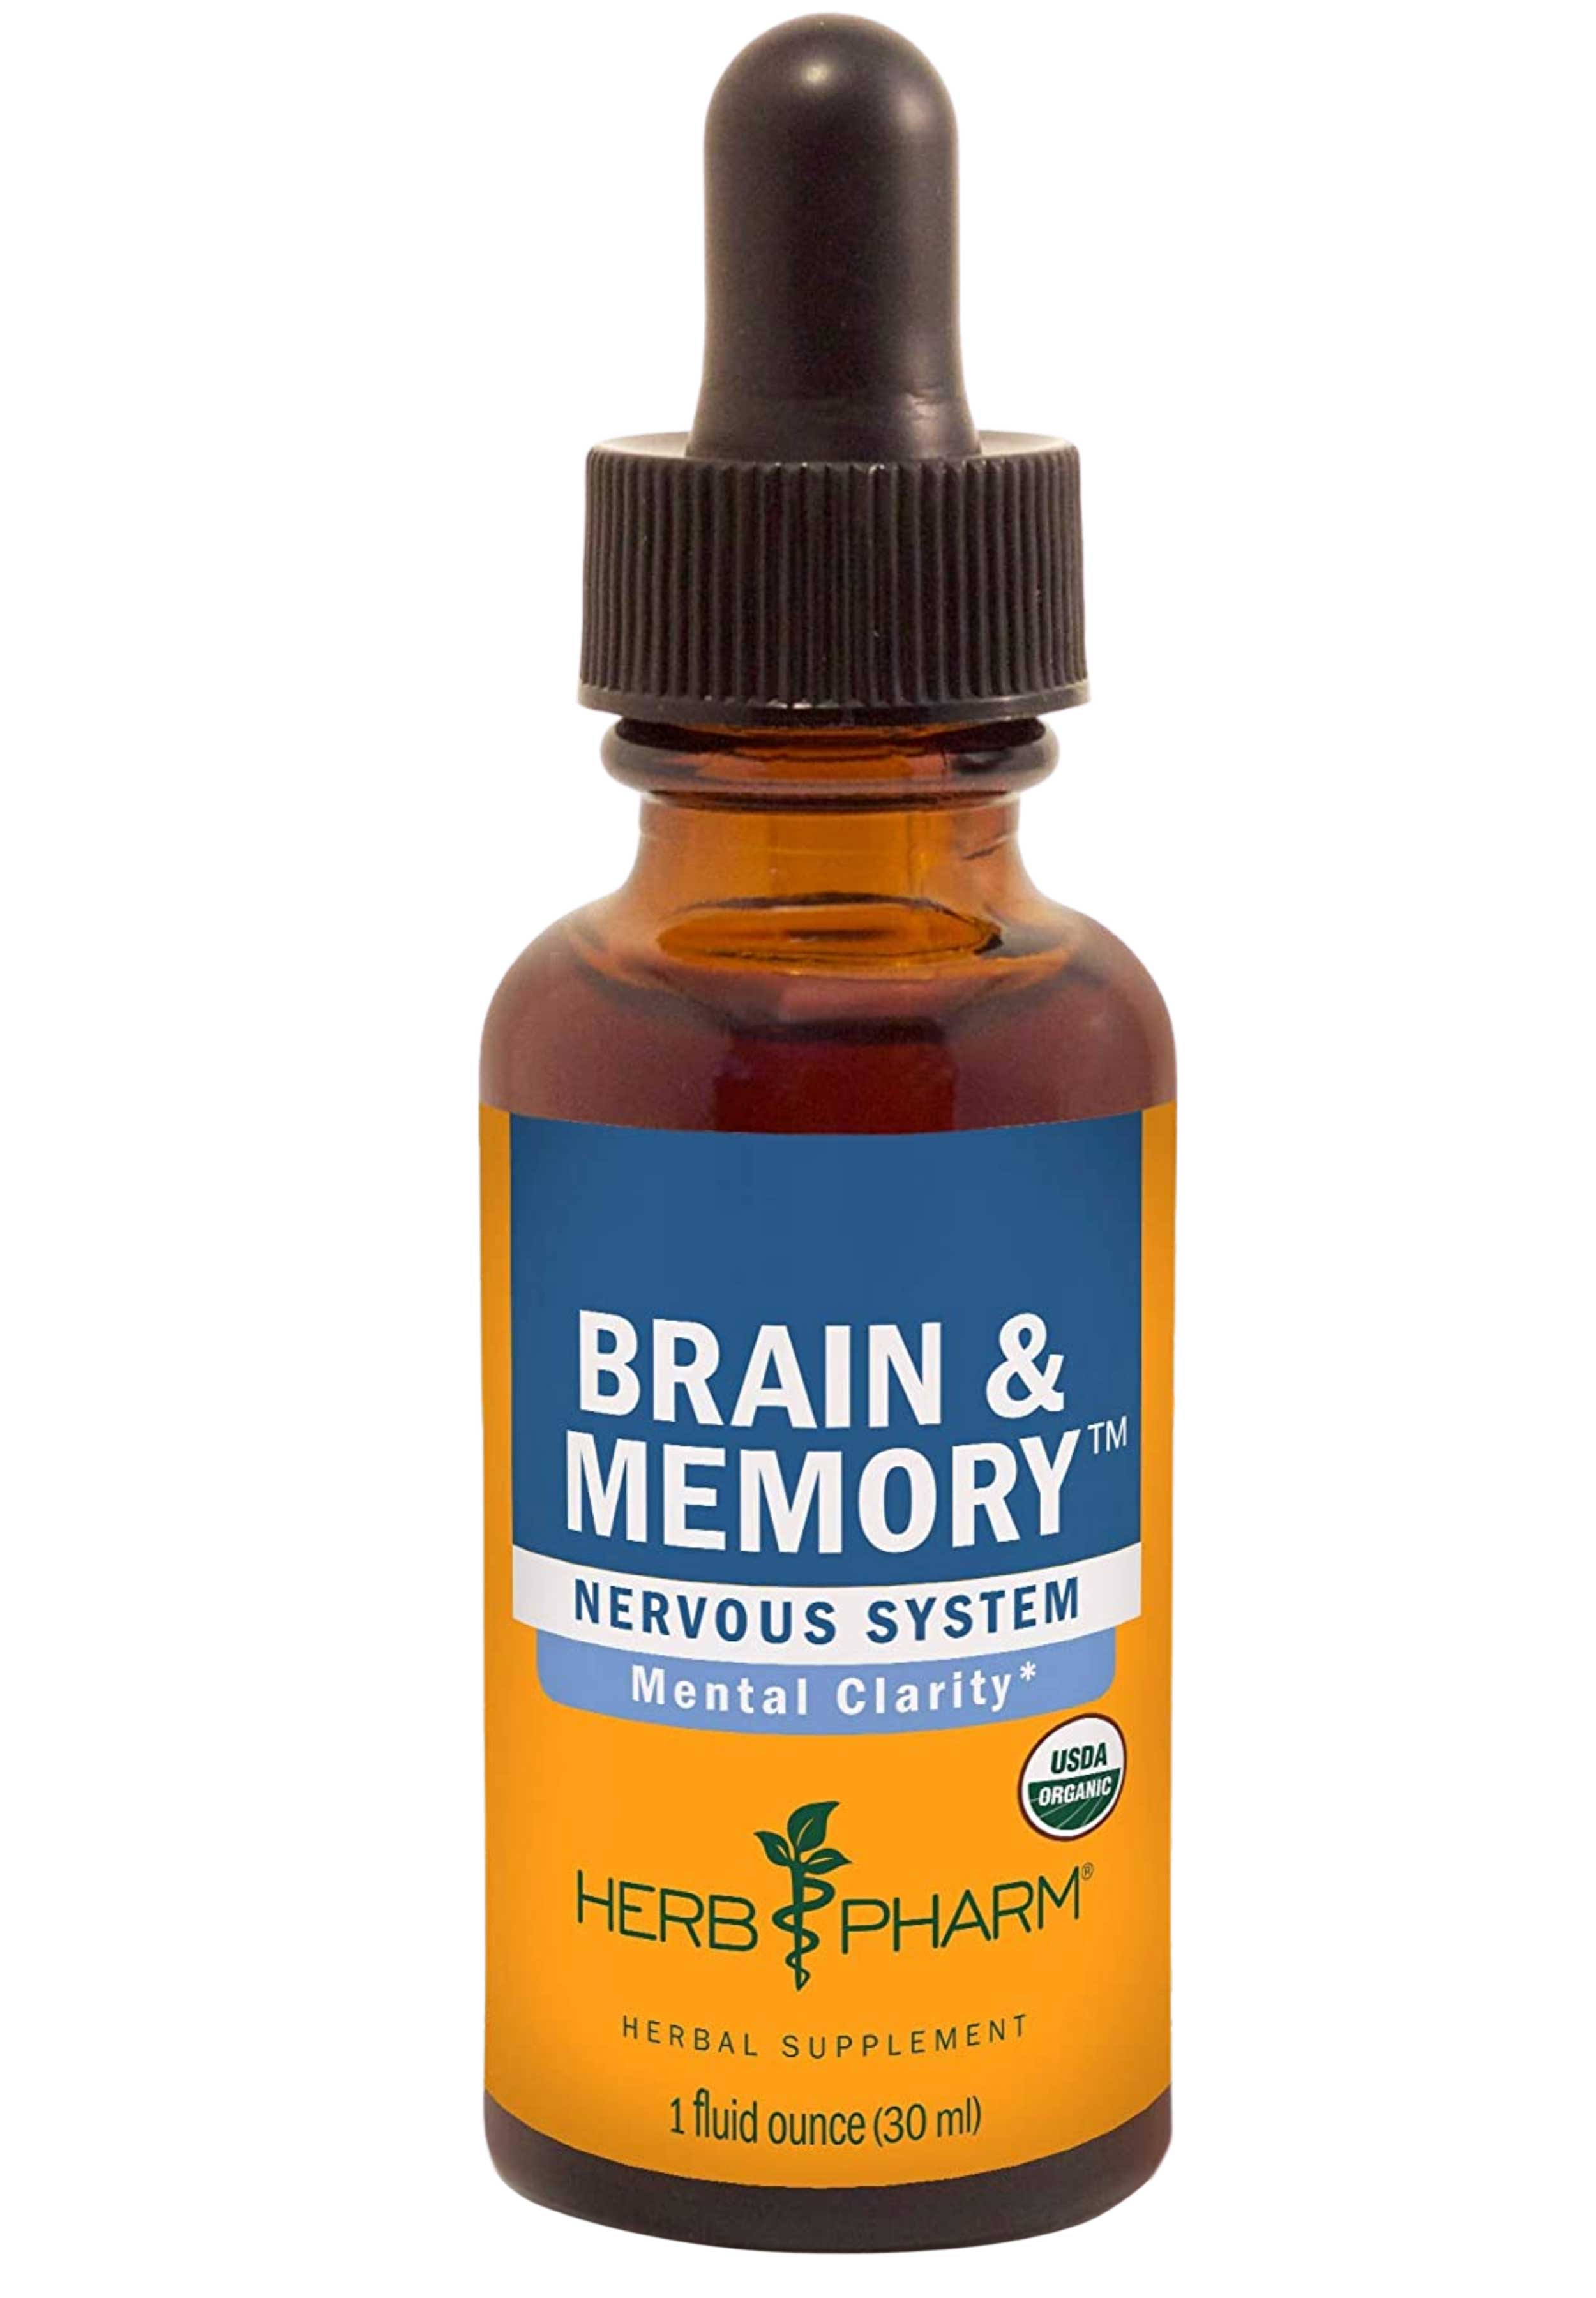 Herb Pharm Brain & Memory